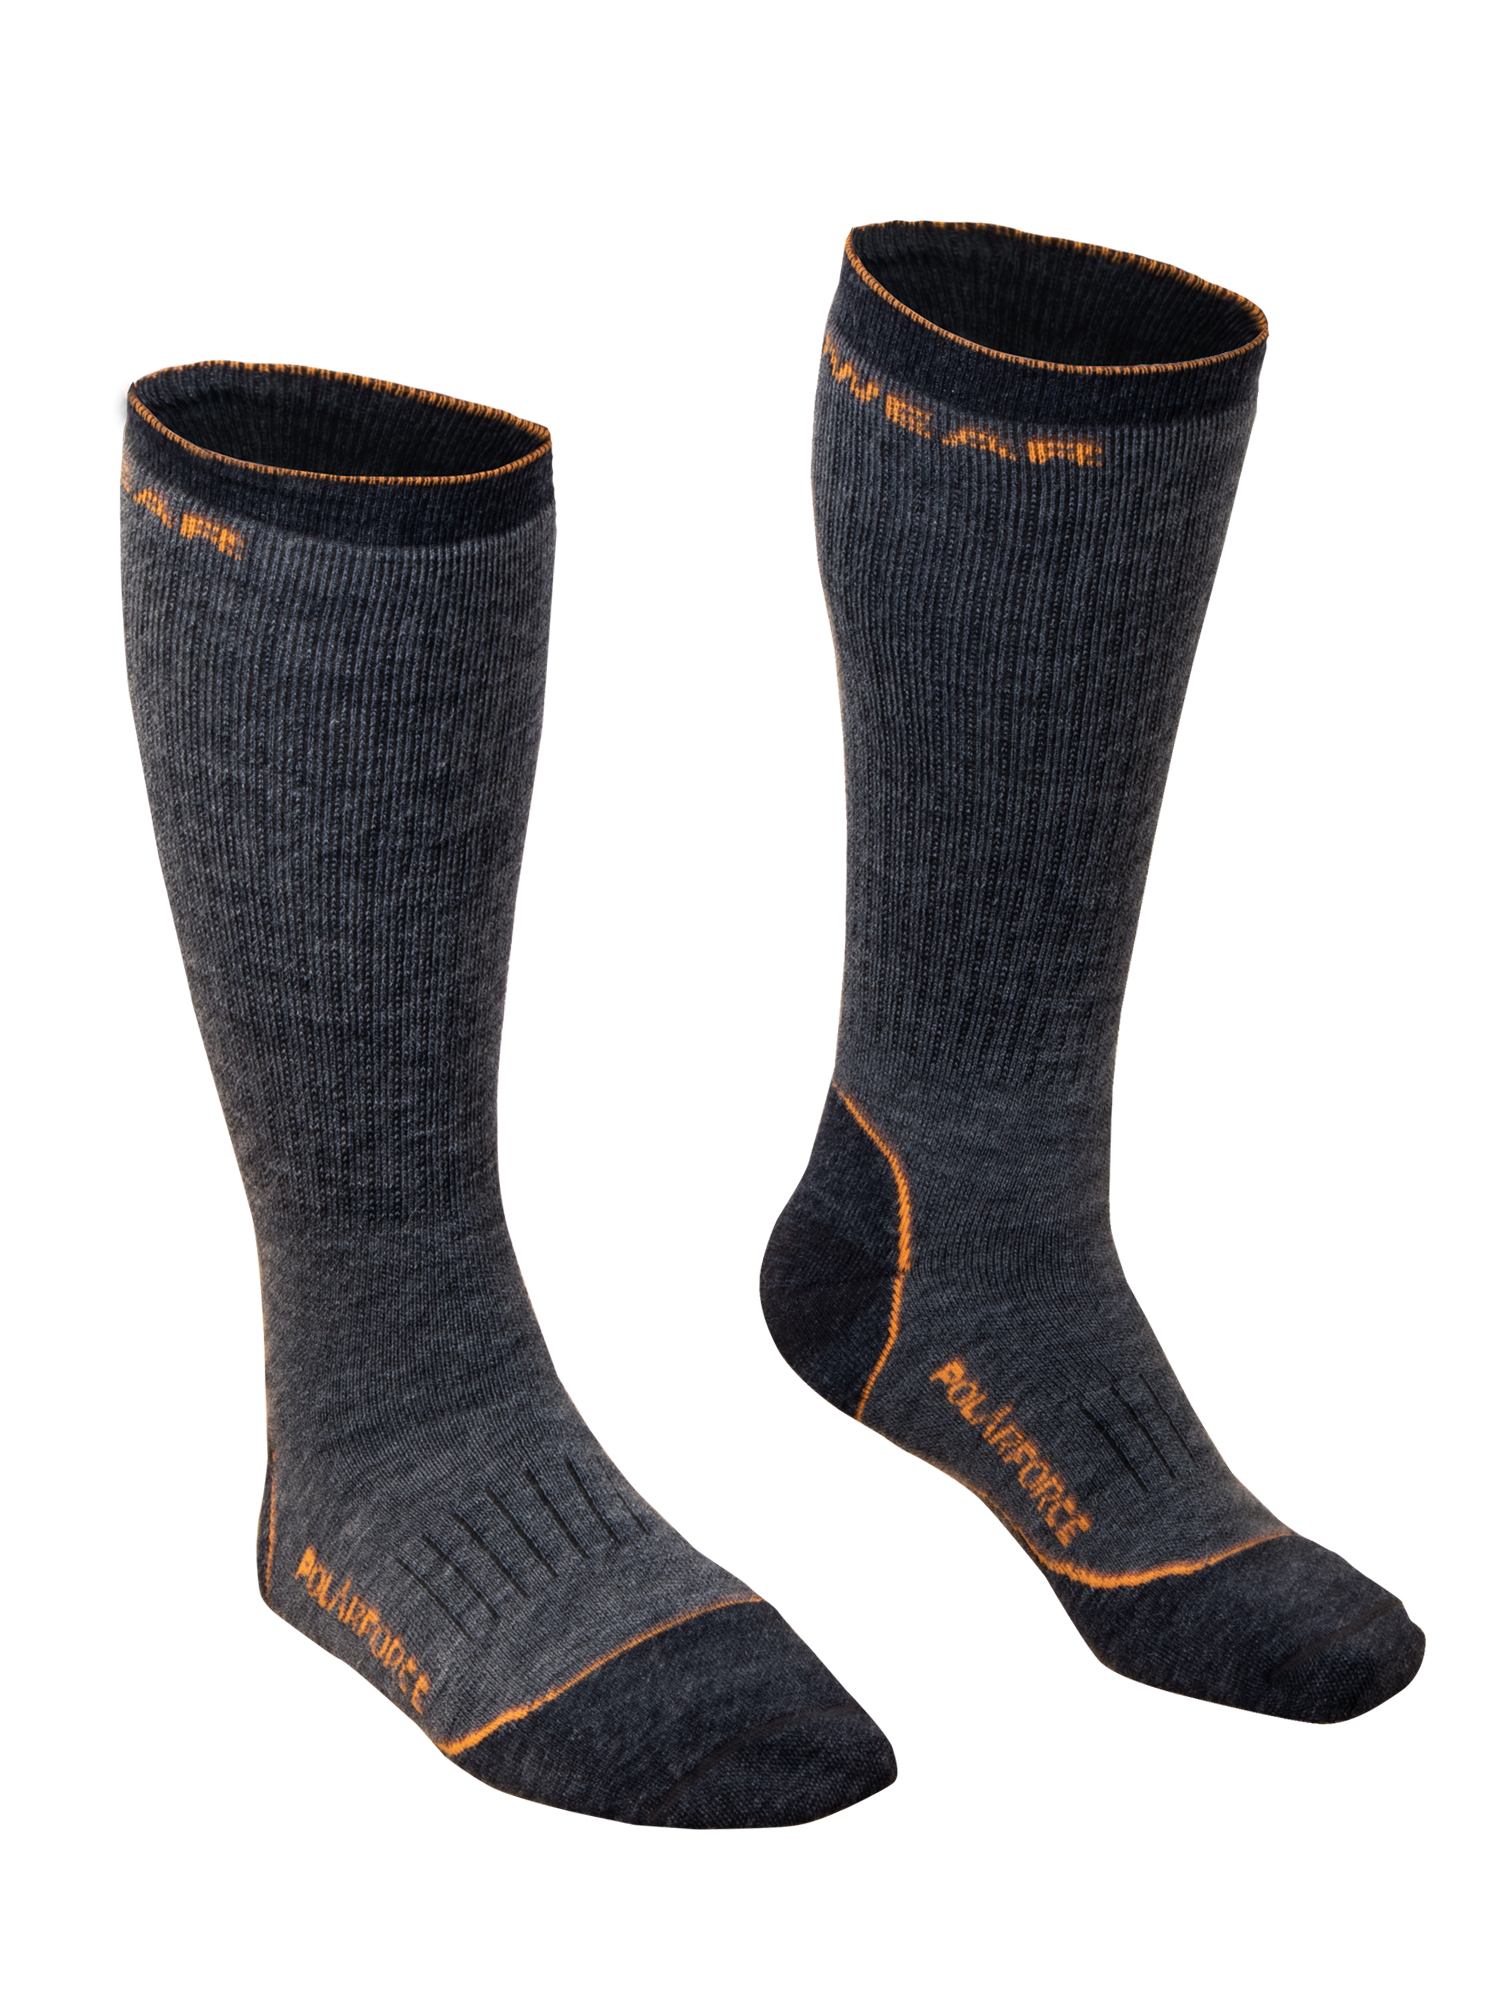 RefrigiWear PolarForce Warm Merino Wool Moisture Wicking 12-Inch Boot Socks, Small/Medium - image 1 of 2